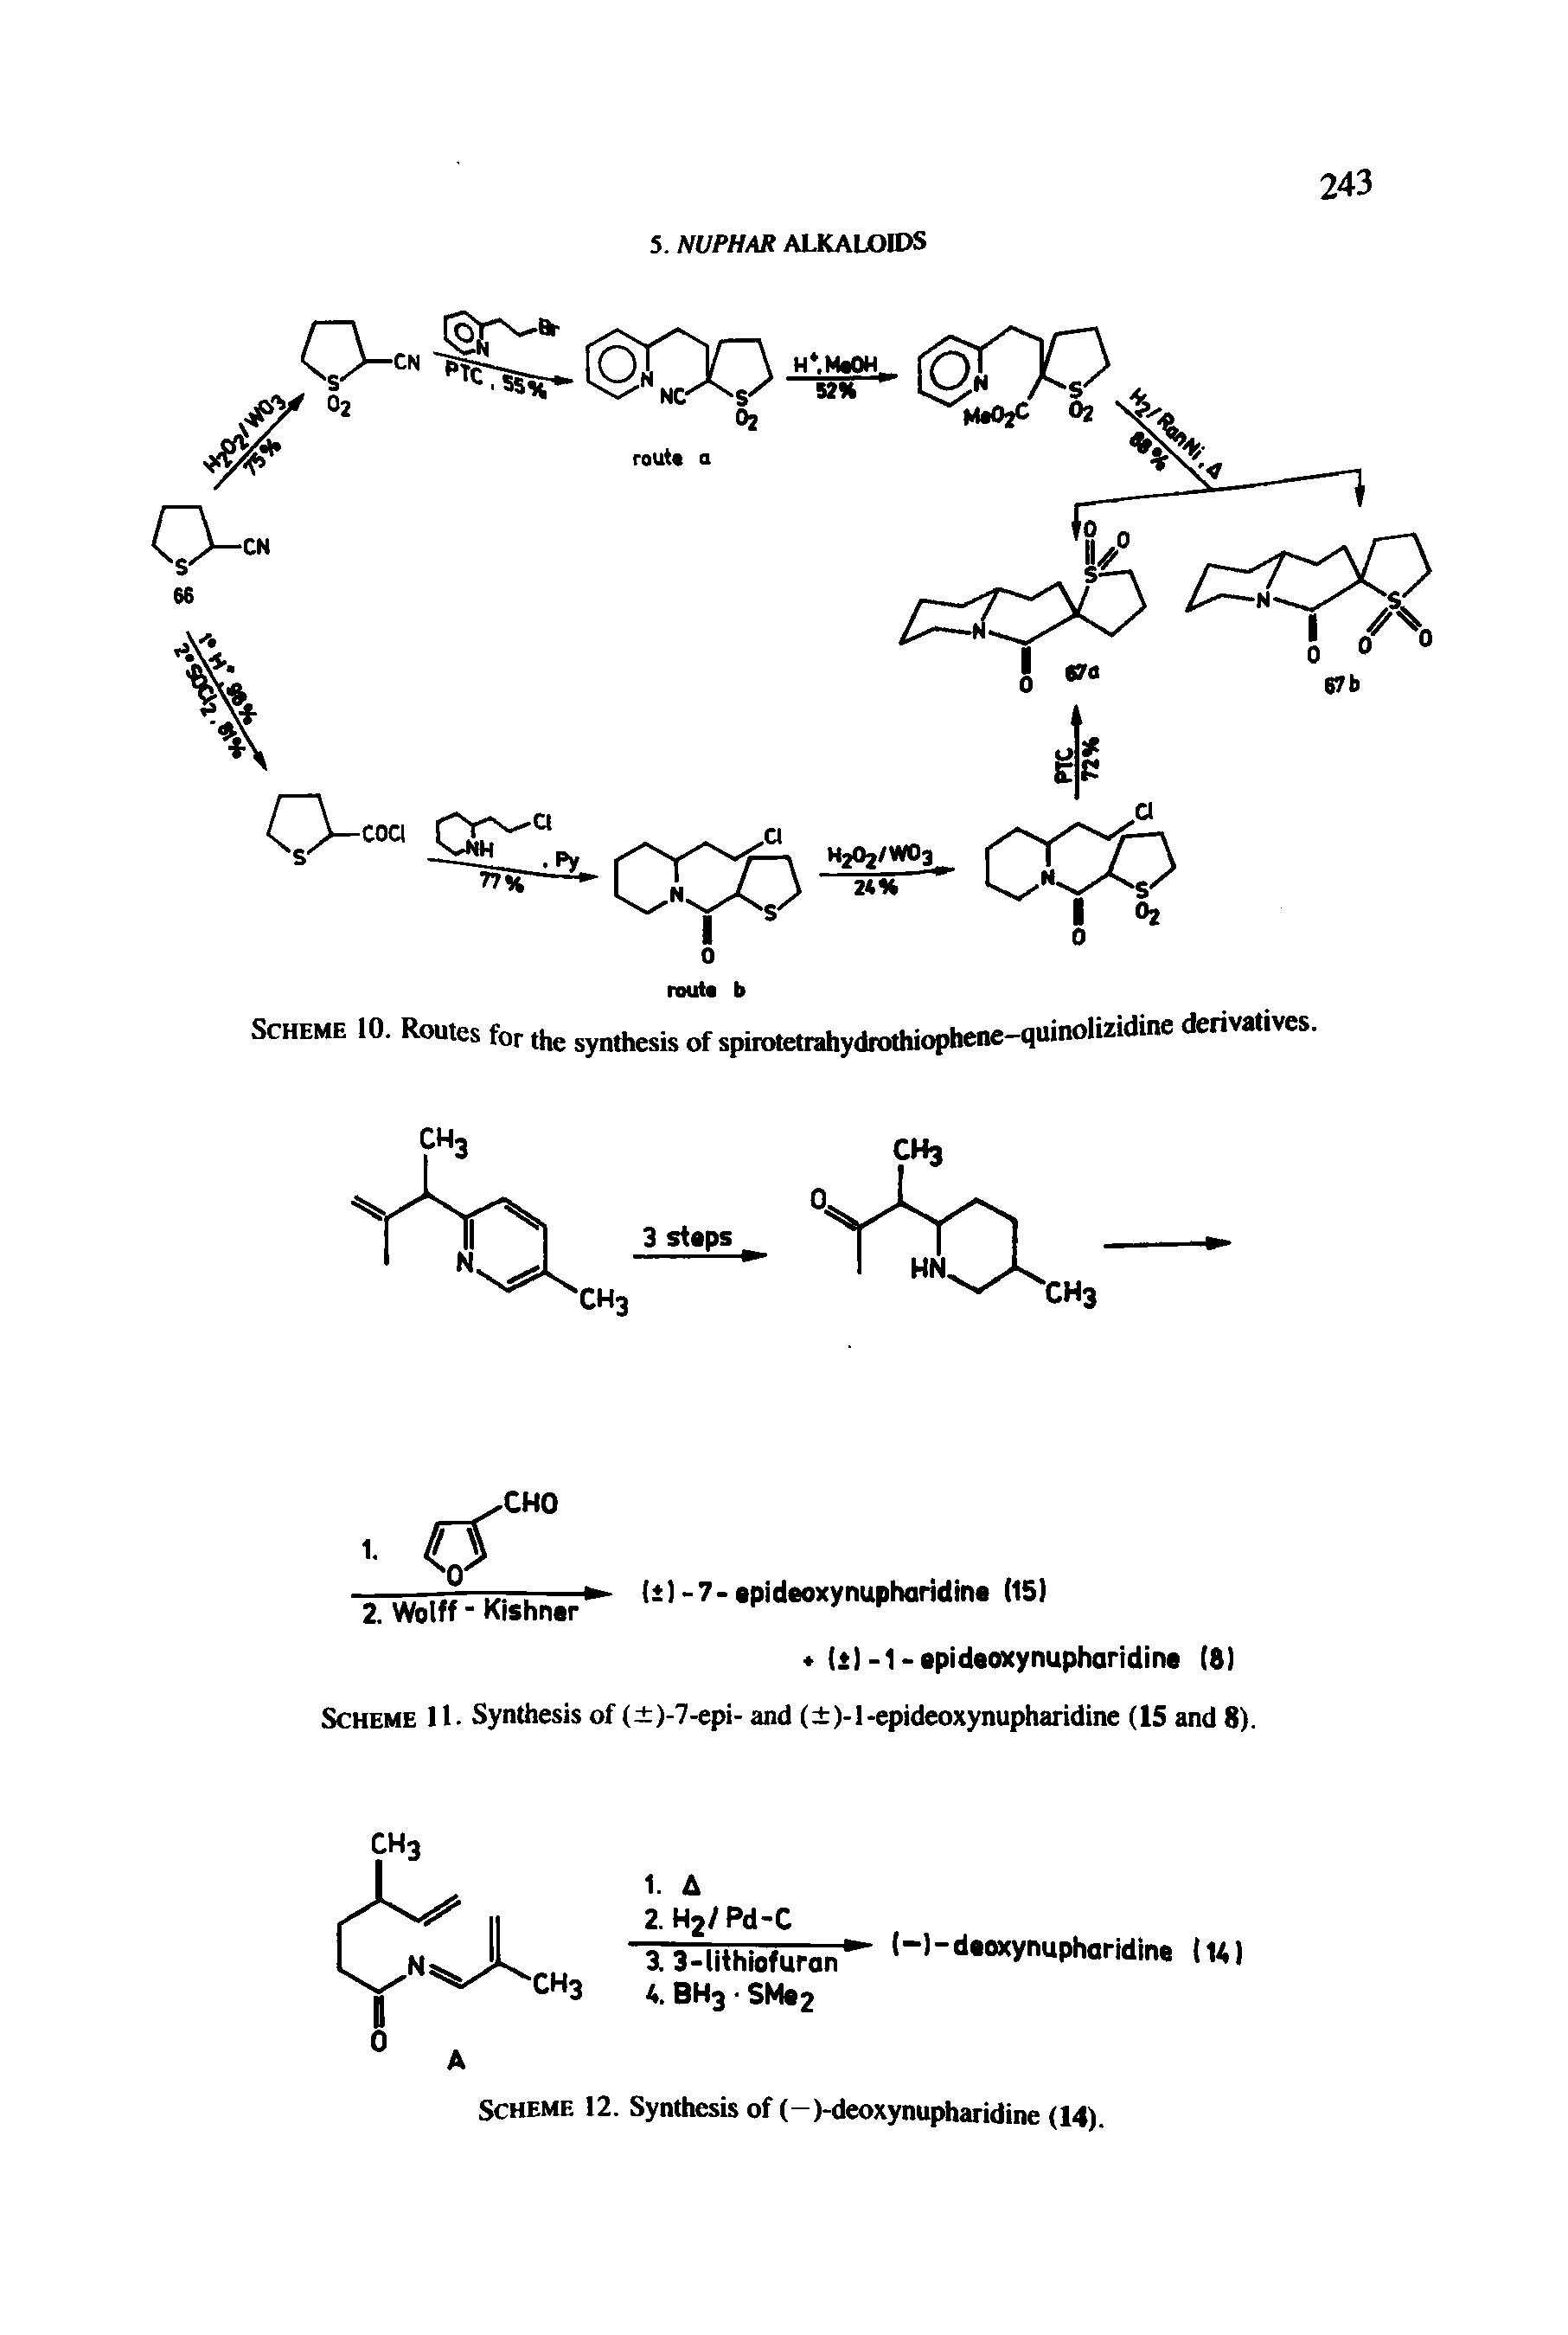 Scheme 10. Routes for, he synthesis of spirotetrahydrothiophene-quinolizidine derivatives.